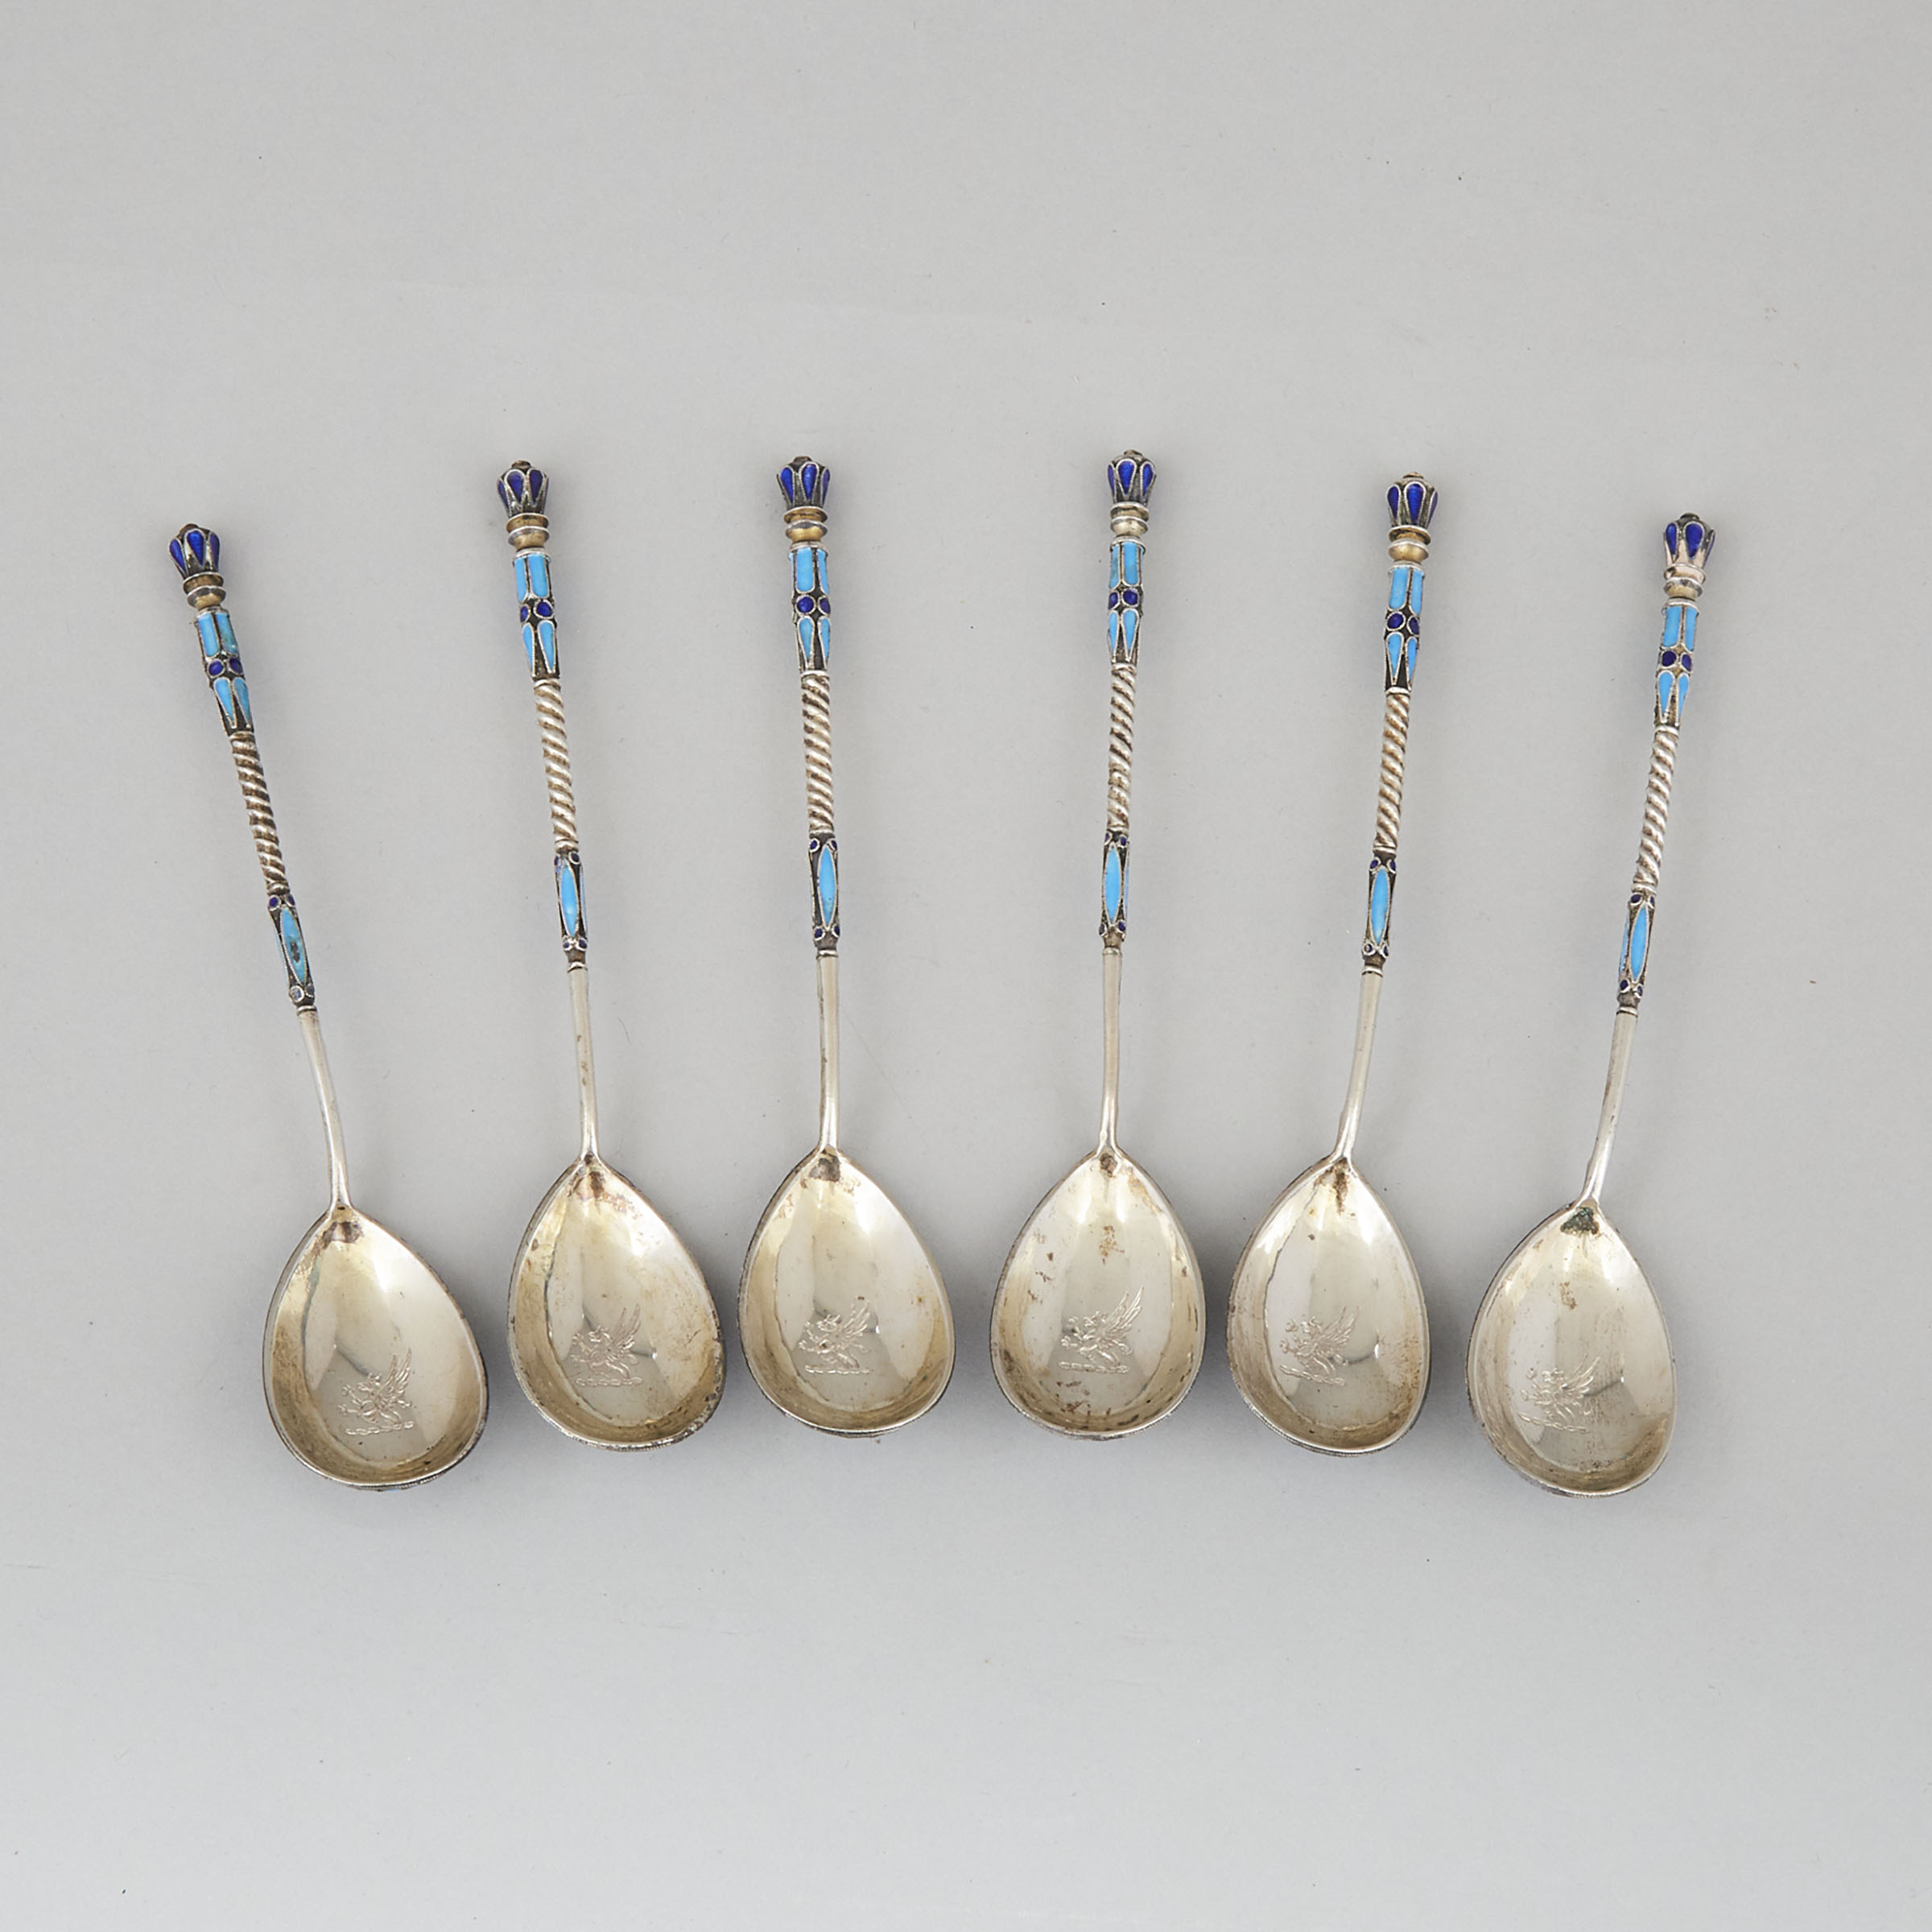 Set of Six Russian Cloisonné Enameled Silver Tea Spoons, Moscow, Sergey Shaposhnikov, c.1898-1908